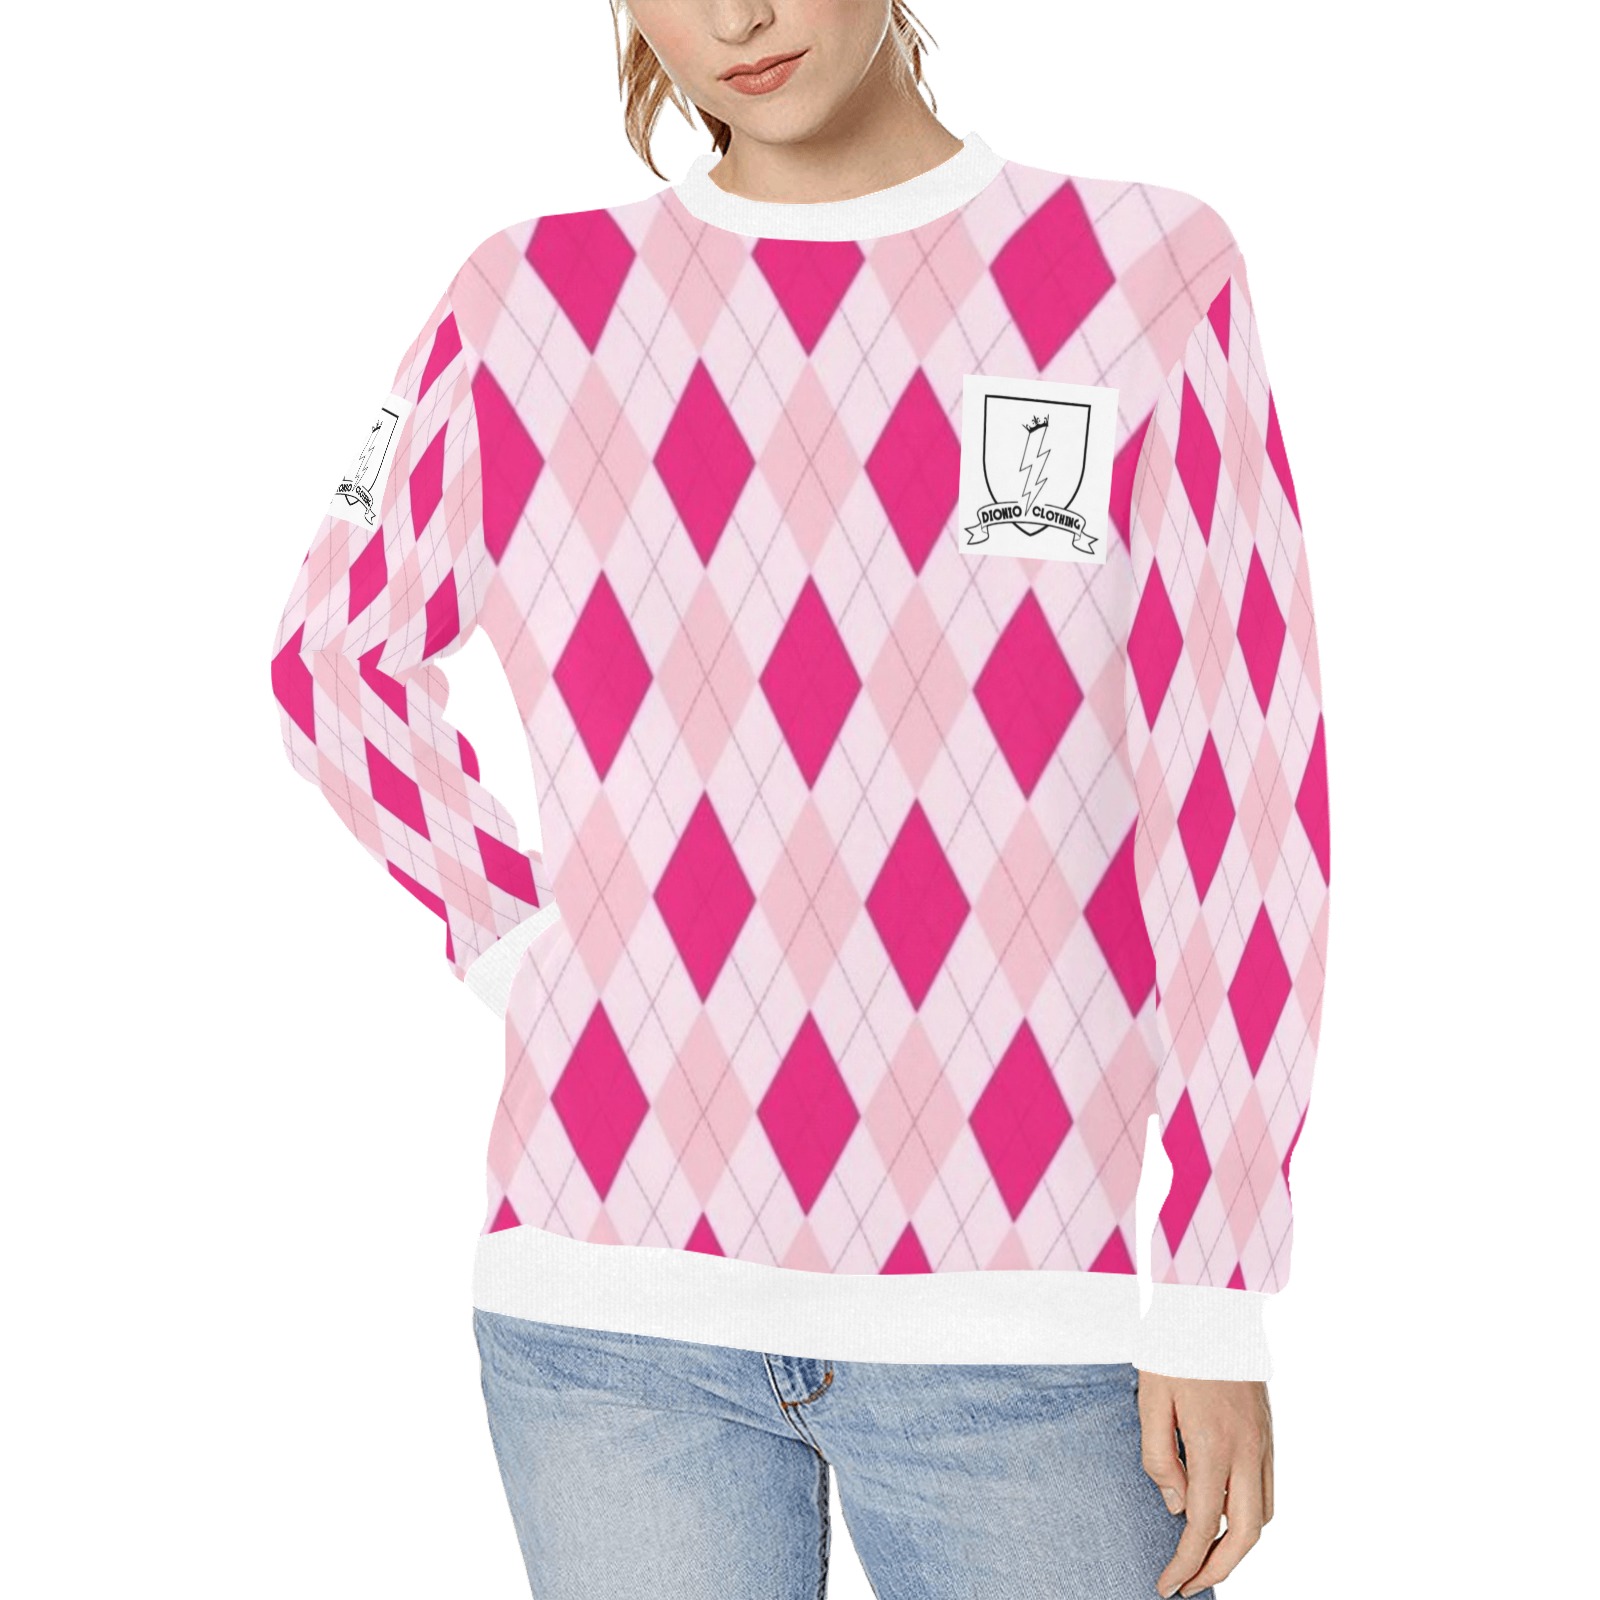 DIONIO Clothing - Women's Argyle Sweatshirt (Red,Pink & White) Women's Rib Cuff Crew Neck Sweatshirt (Model H34)